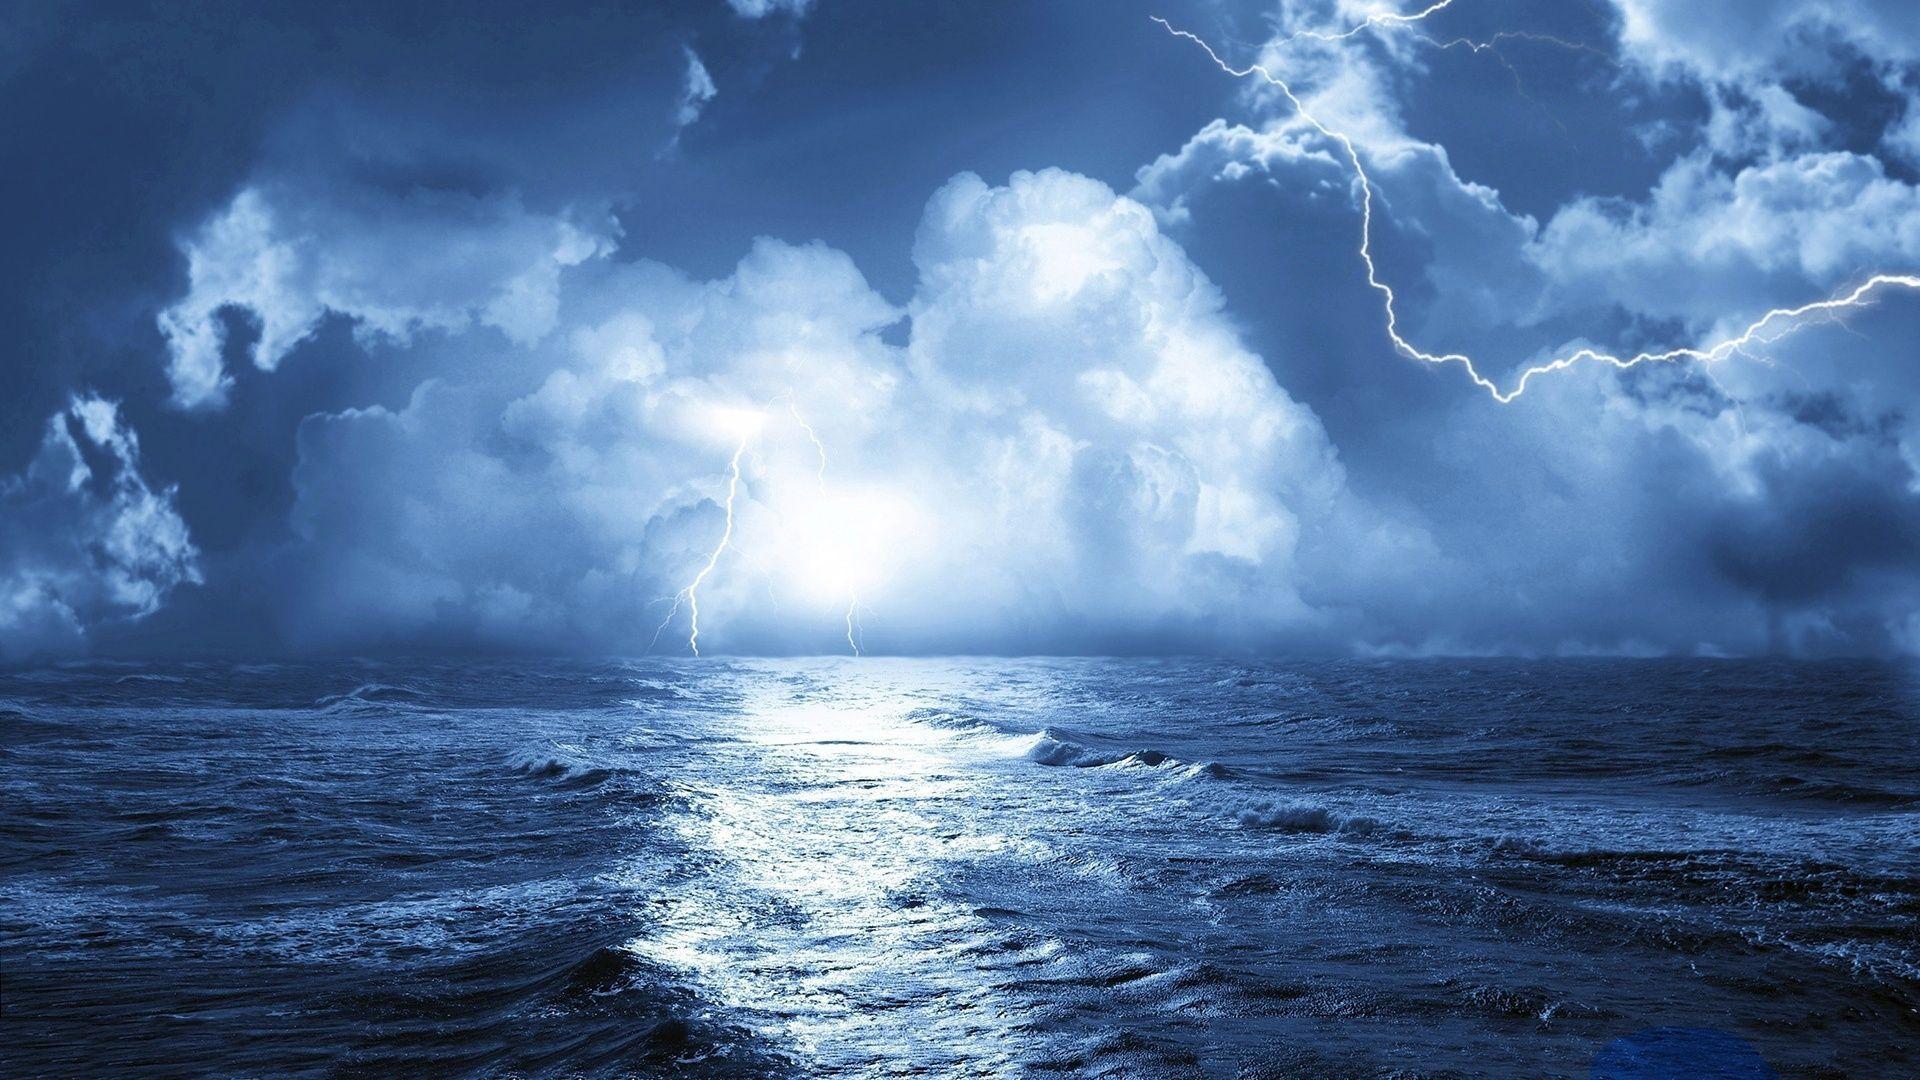 thunder storm. My Land. Storm wallpaper, Ocean storm, Sea storm